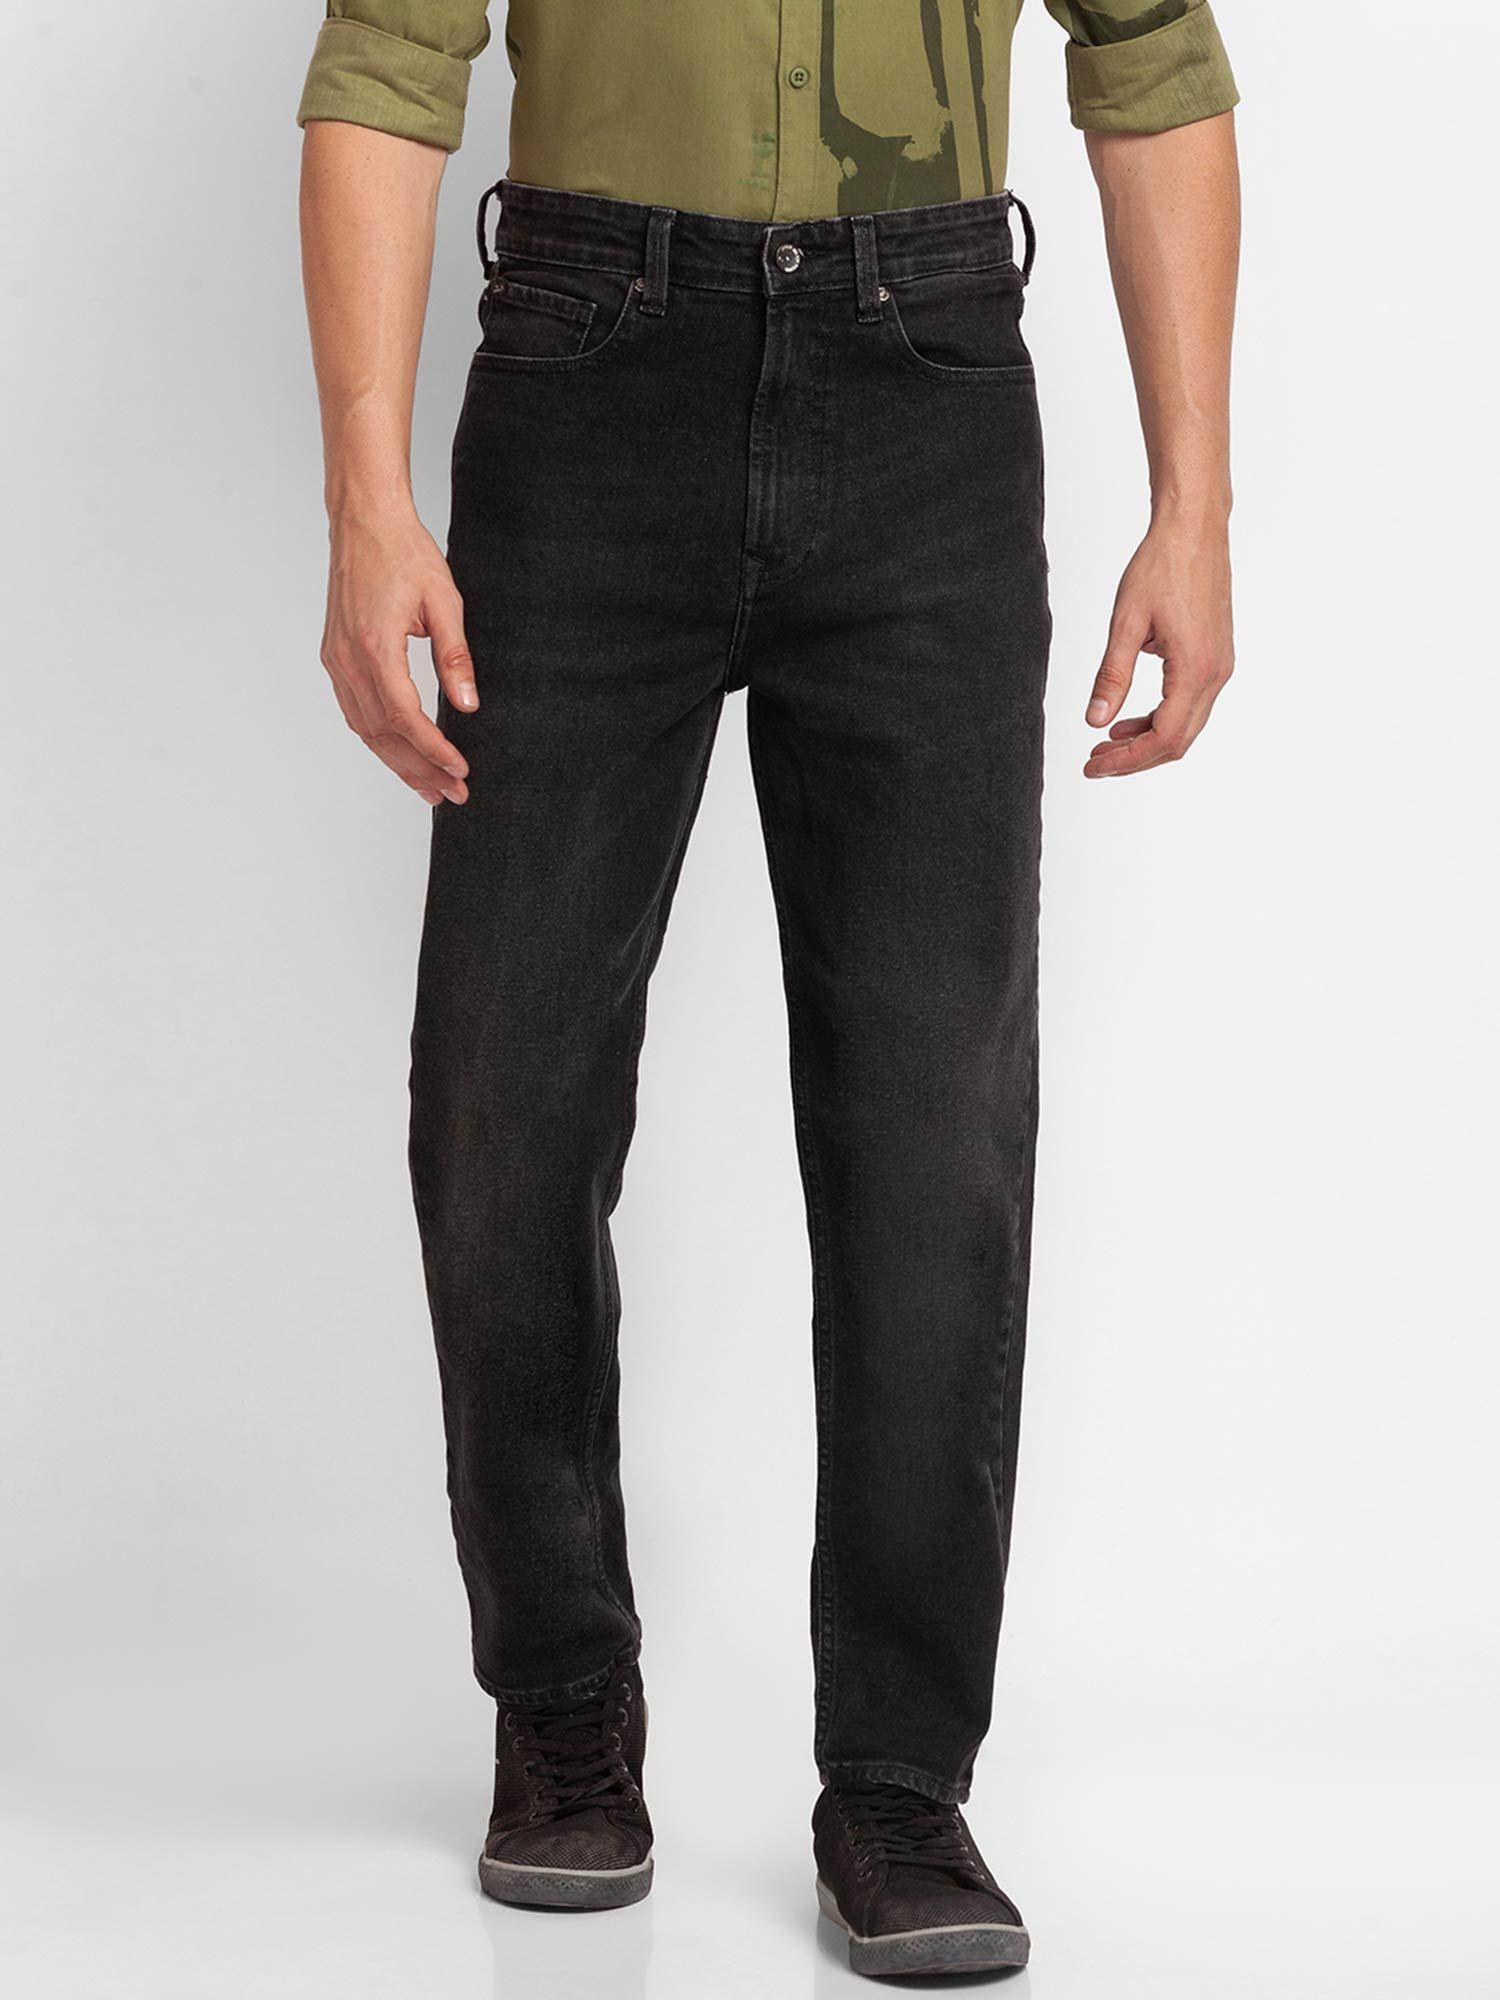 Carbon Black Cotton Loose Fit Regular Length Jeans for Men (renato)